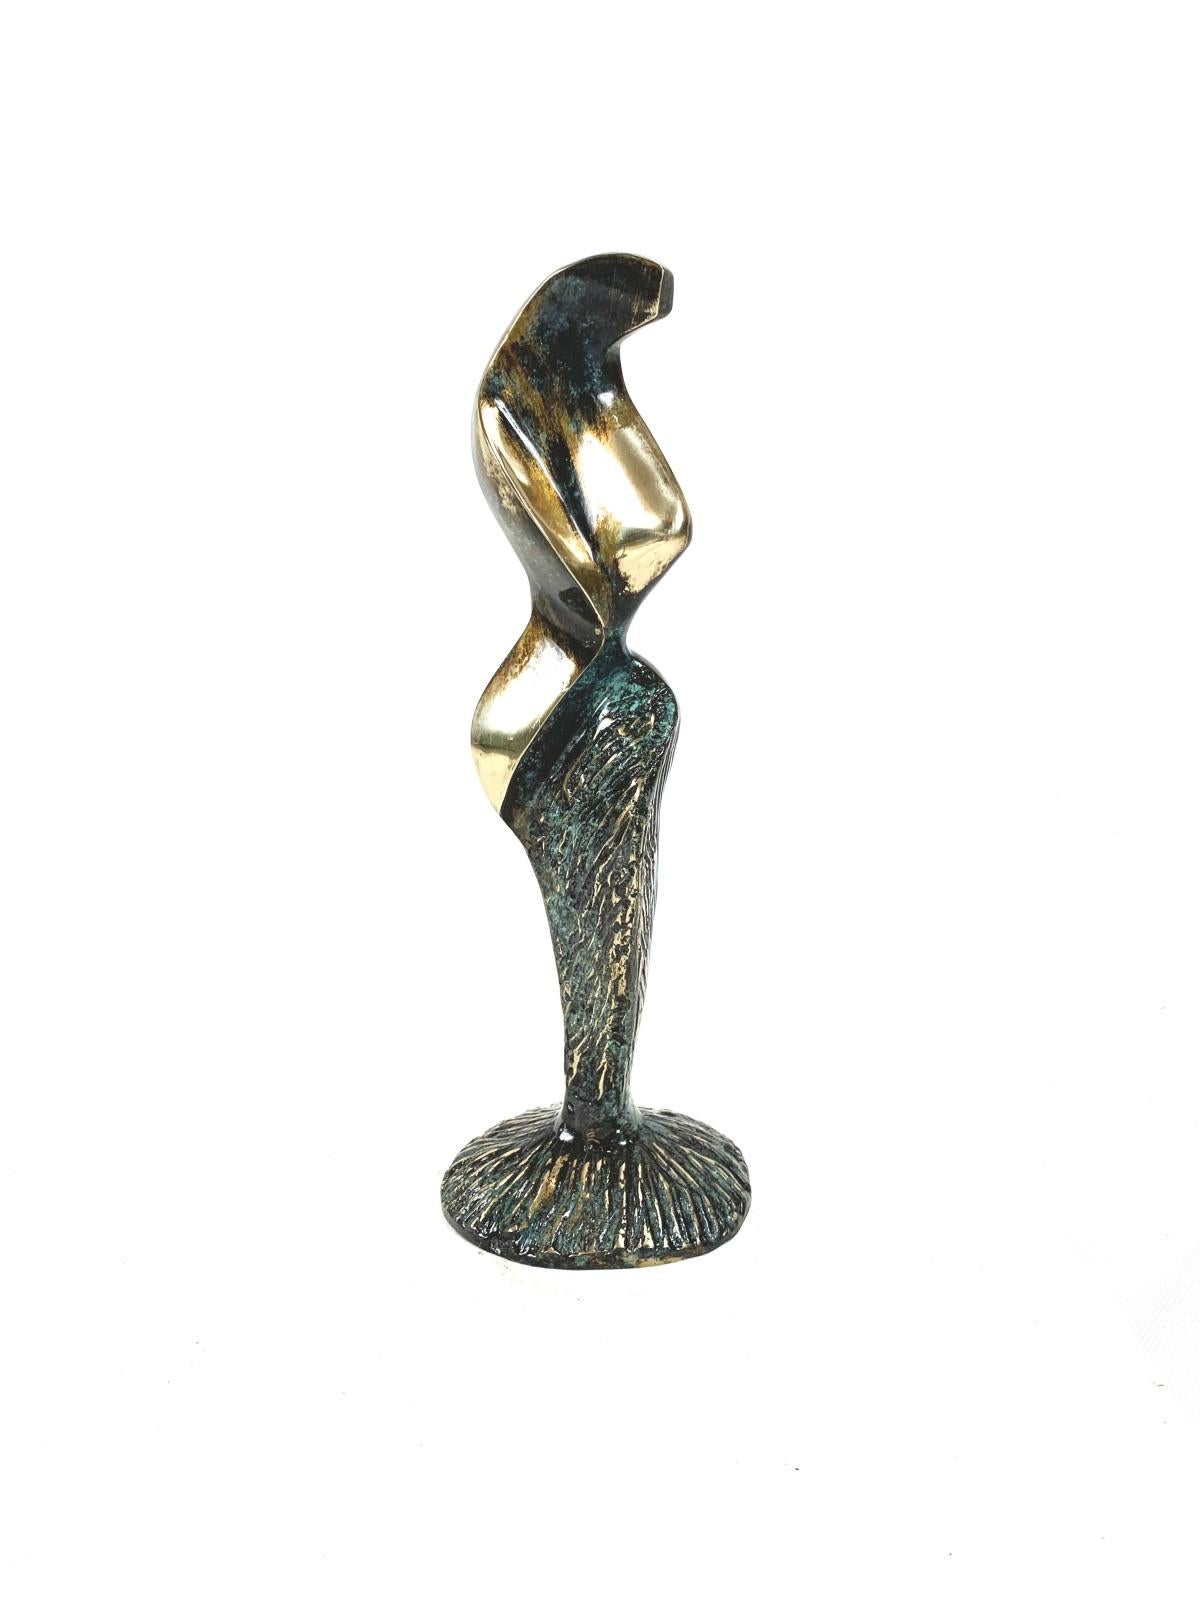 Dame VIII - XXI century Contemporary bronze sculpture, Abstract & figurative